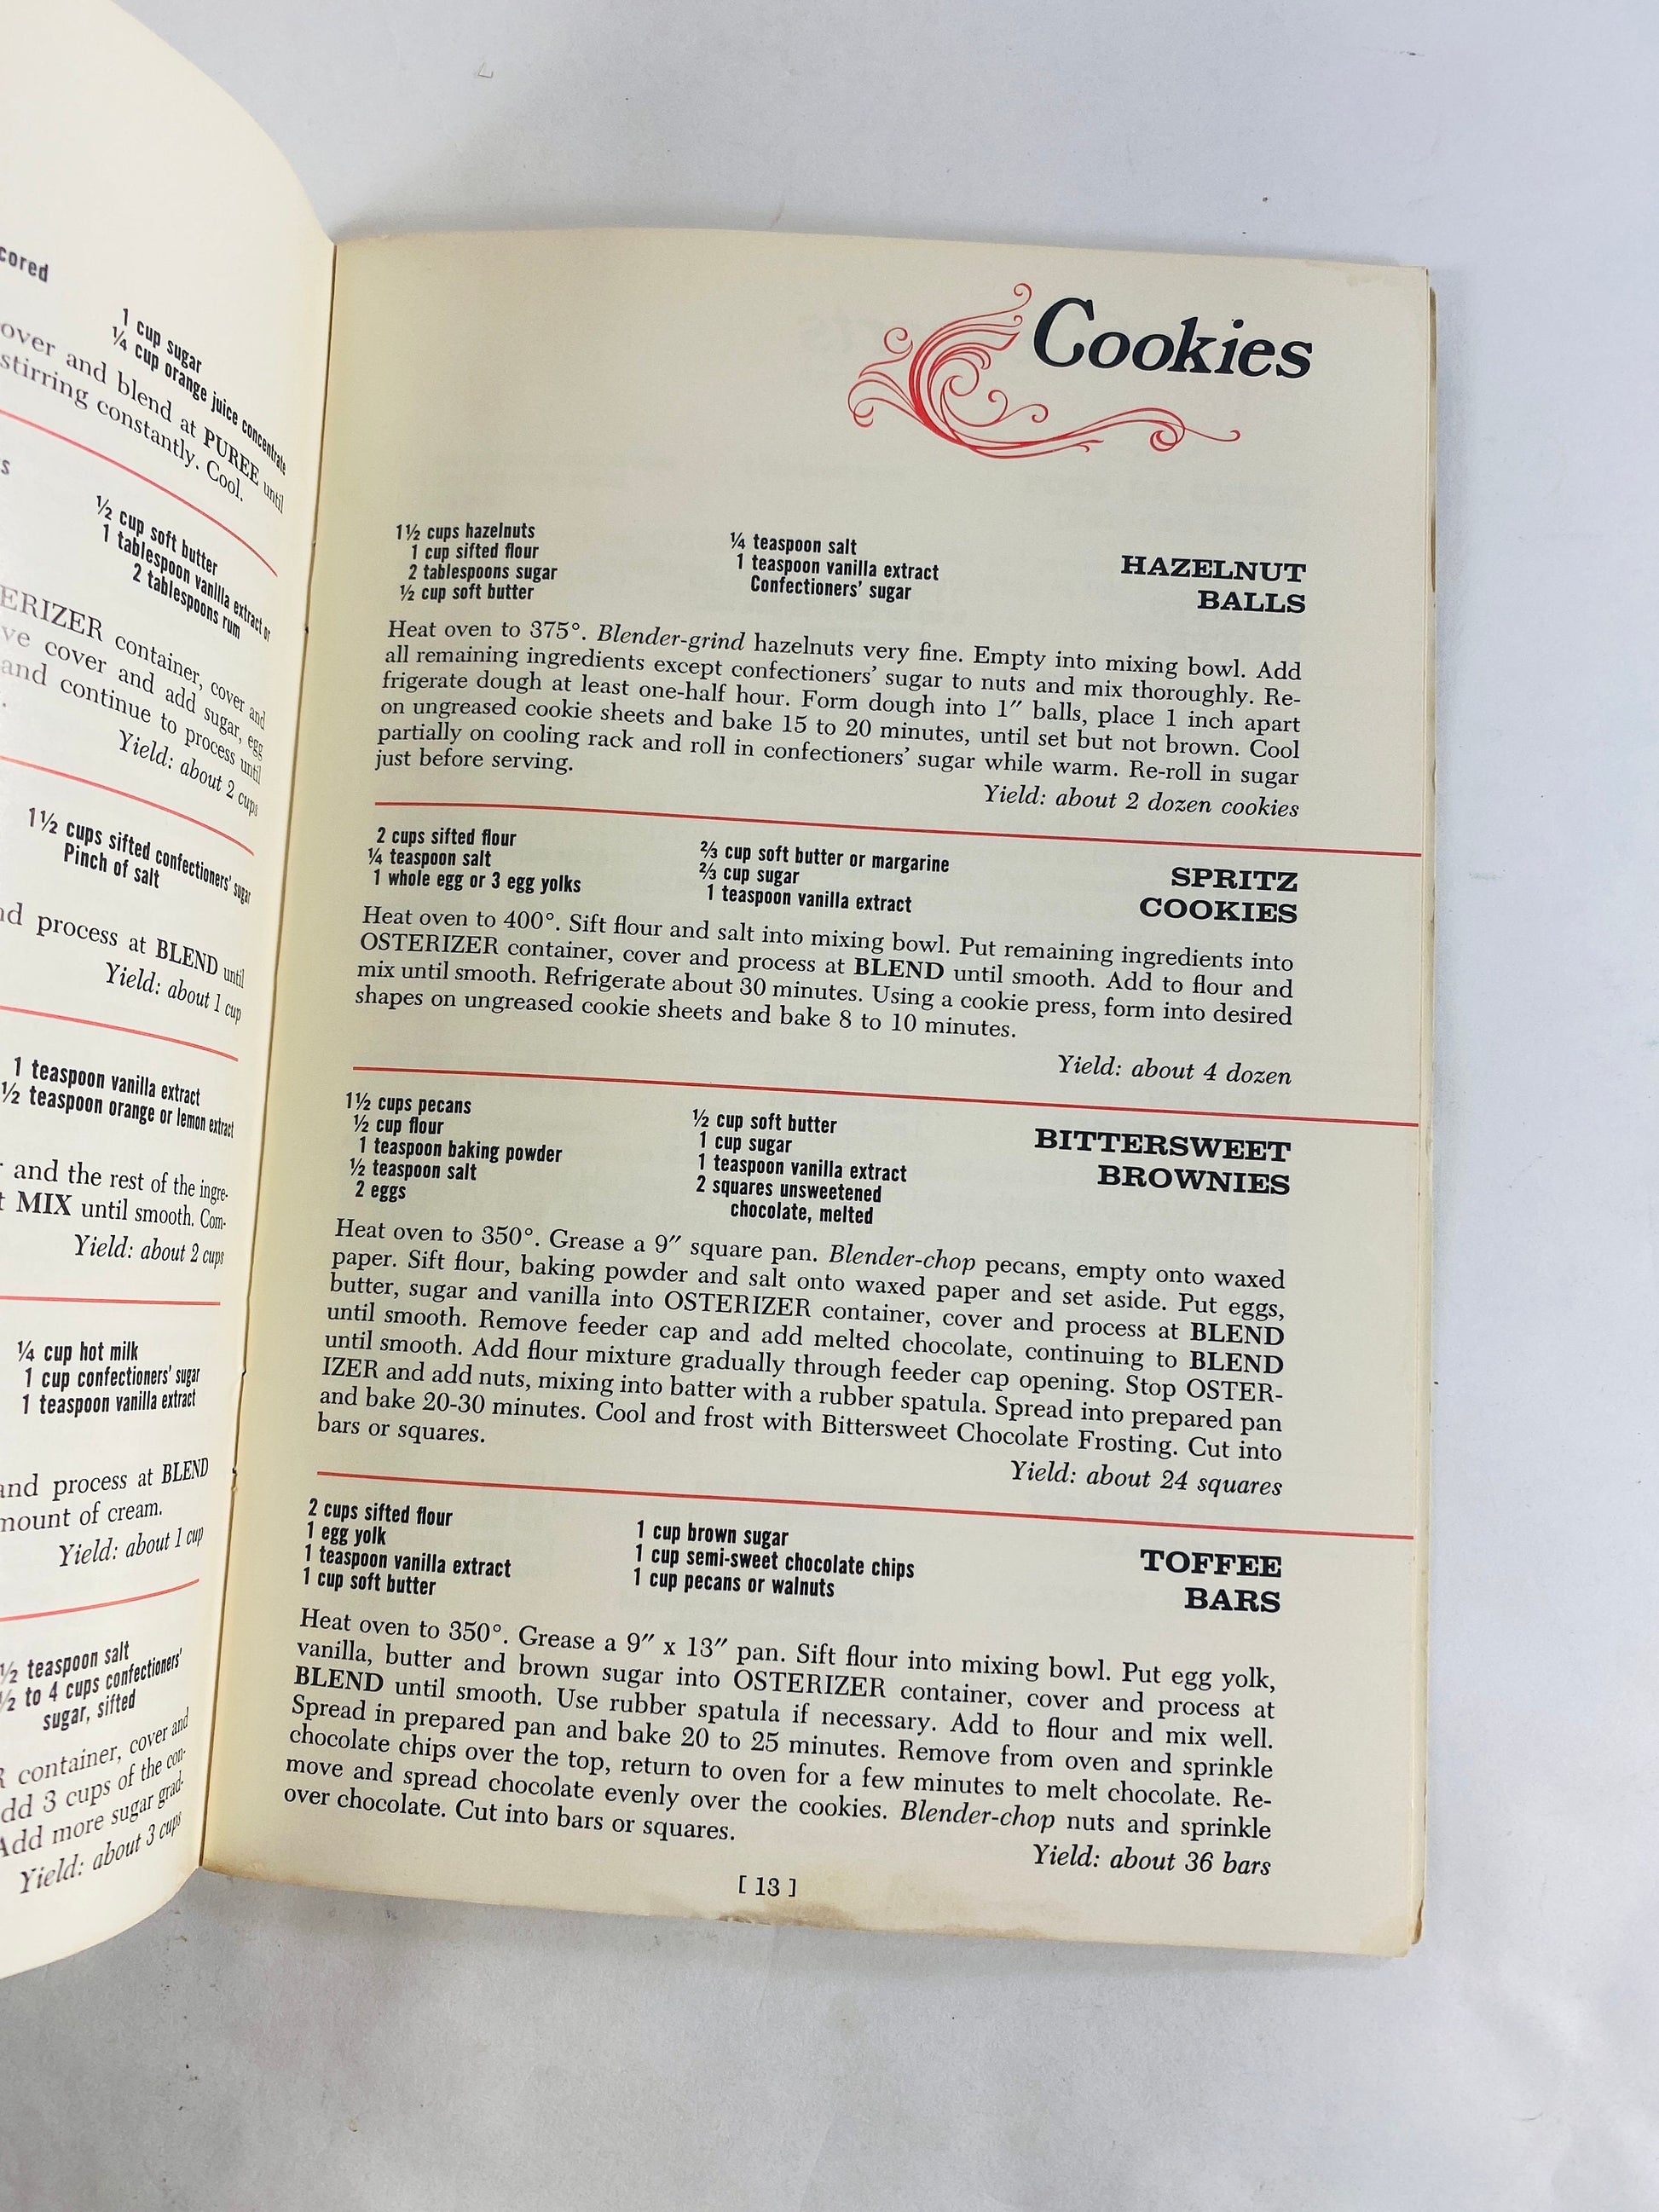 1973 Oster ORIGINAL Osterizer Vintage booklet of recipes. Retro blender kitchen tricks, do's & don'ts spin cookery. 1970s cookbook